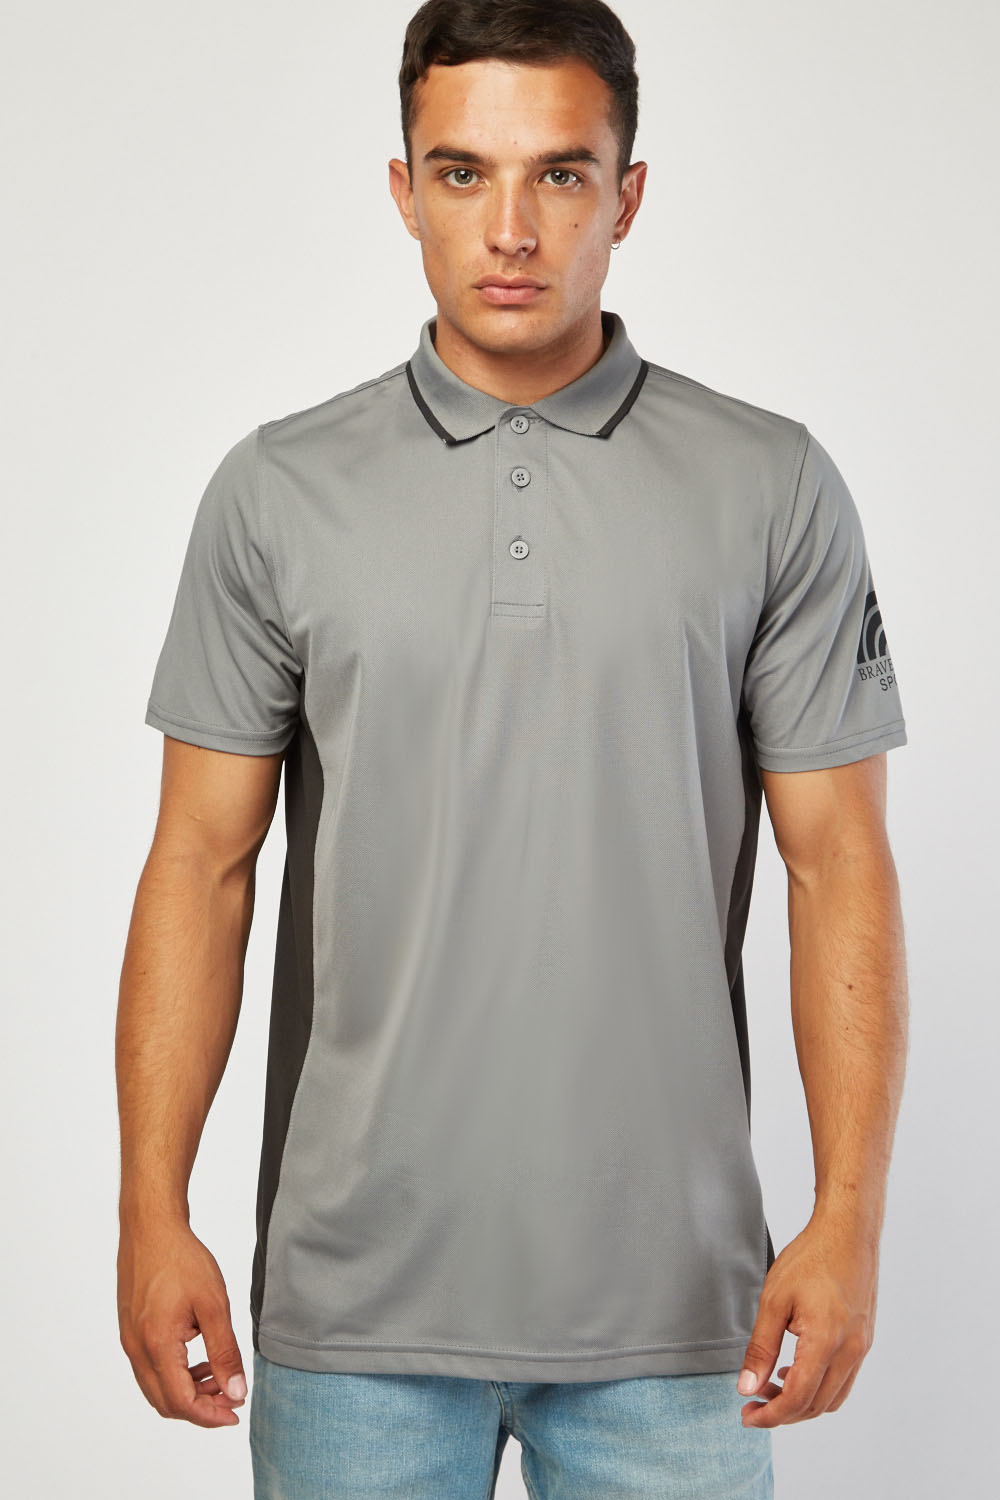 Short Sleeve Polo Shirt - Just $7